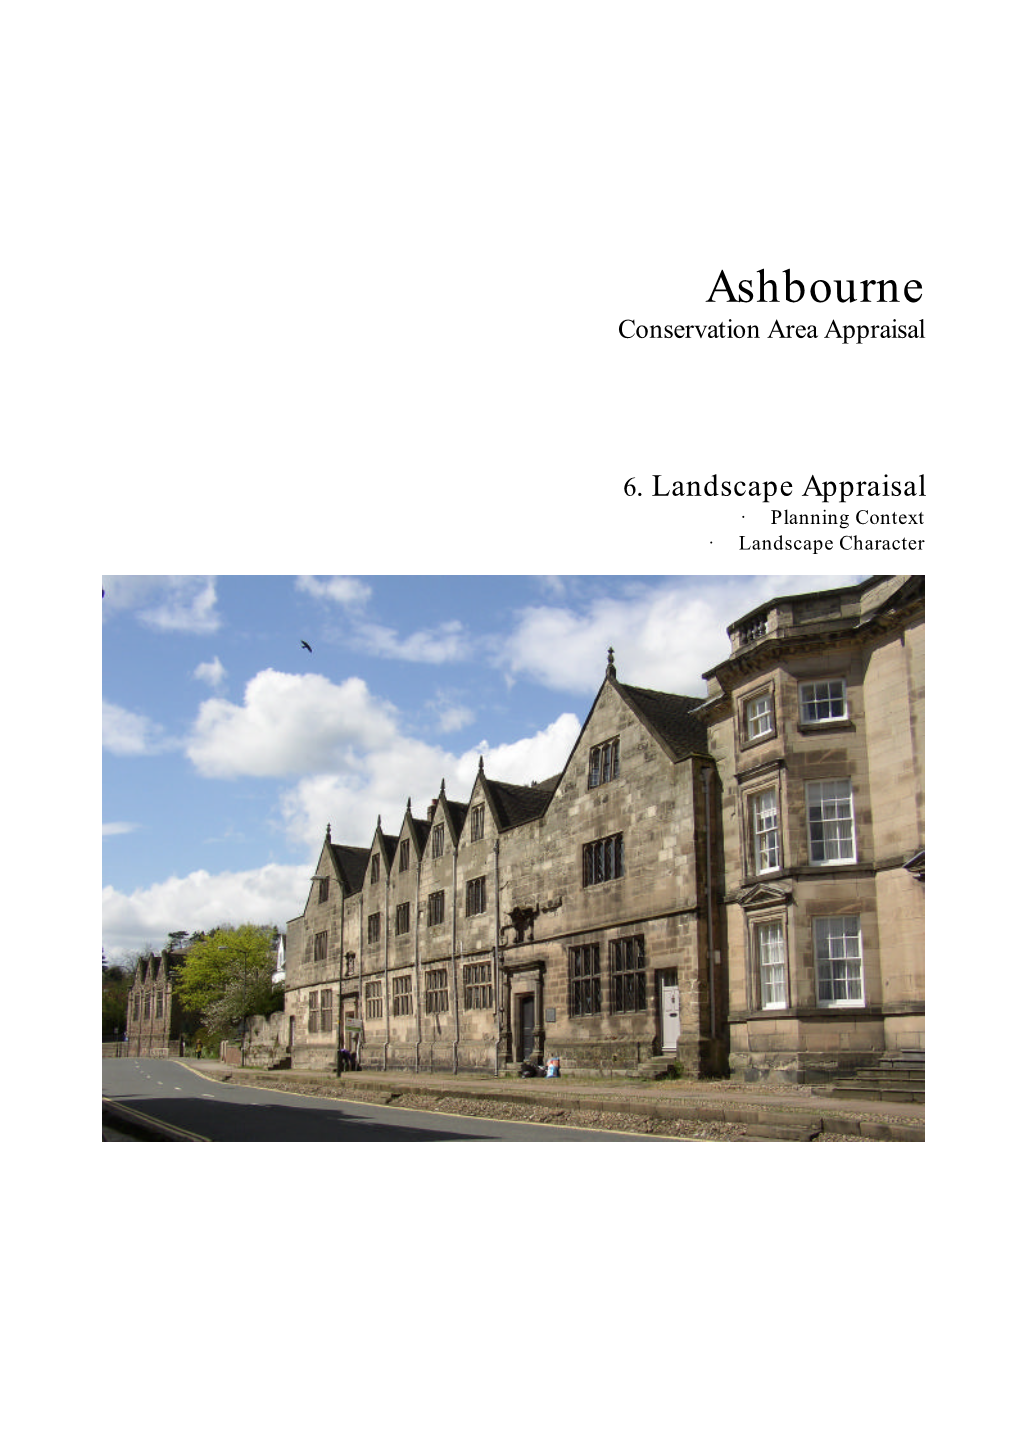 Ashbourne Conservation Area Appraisal